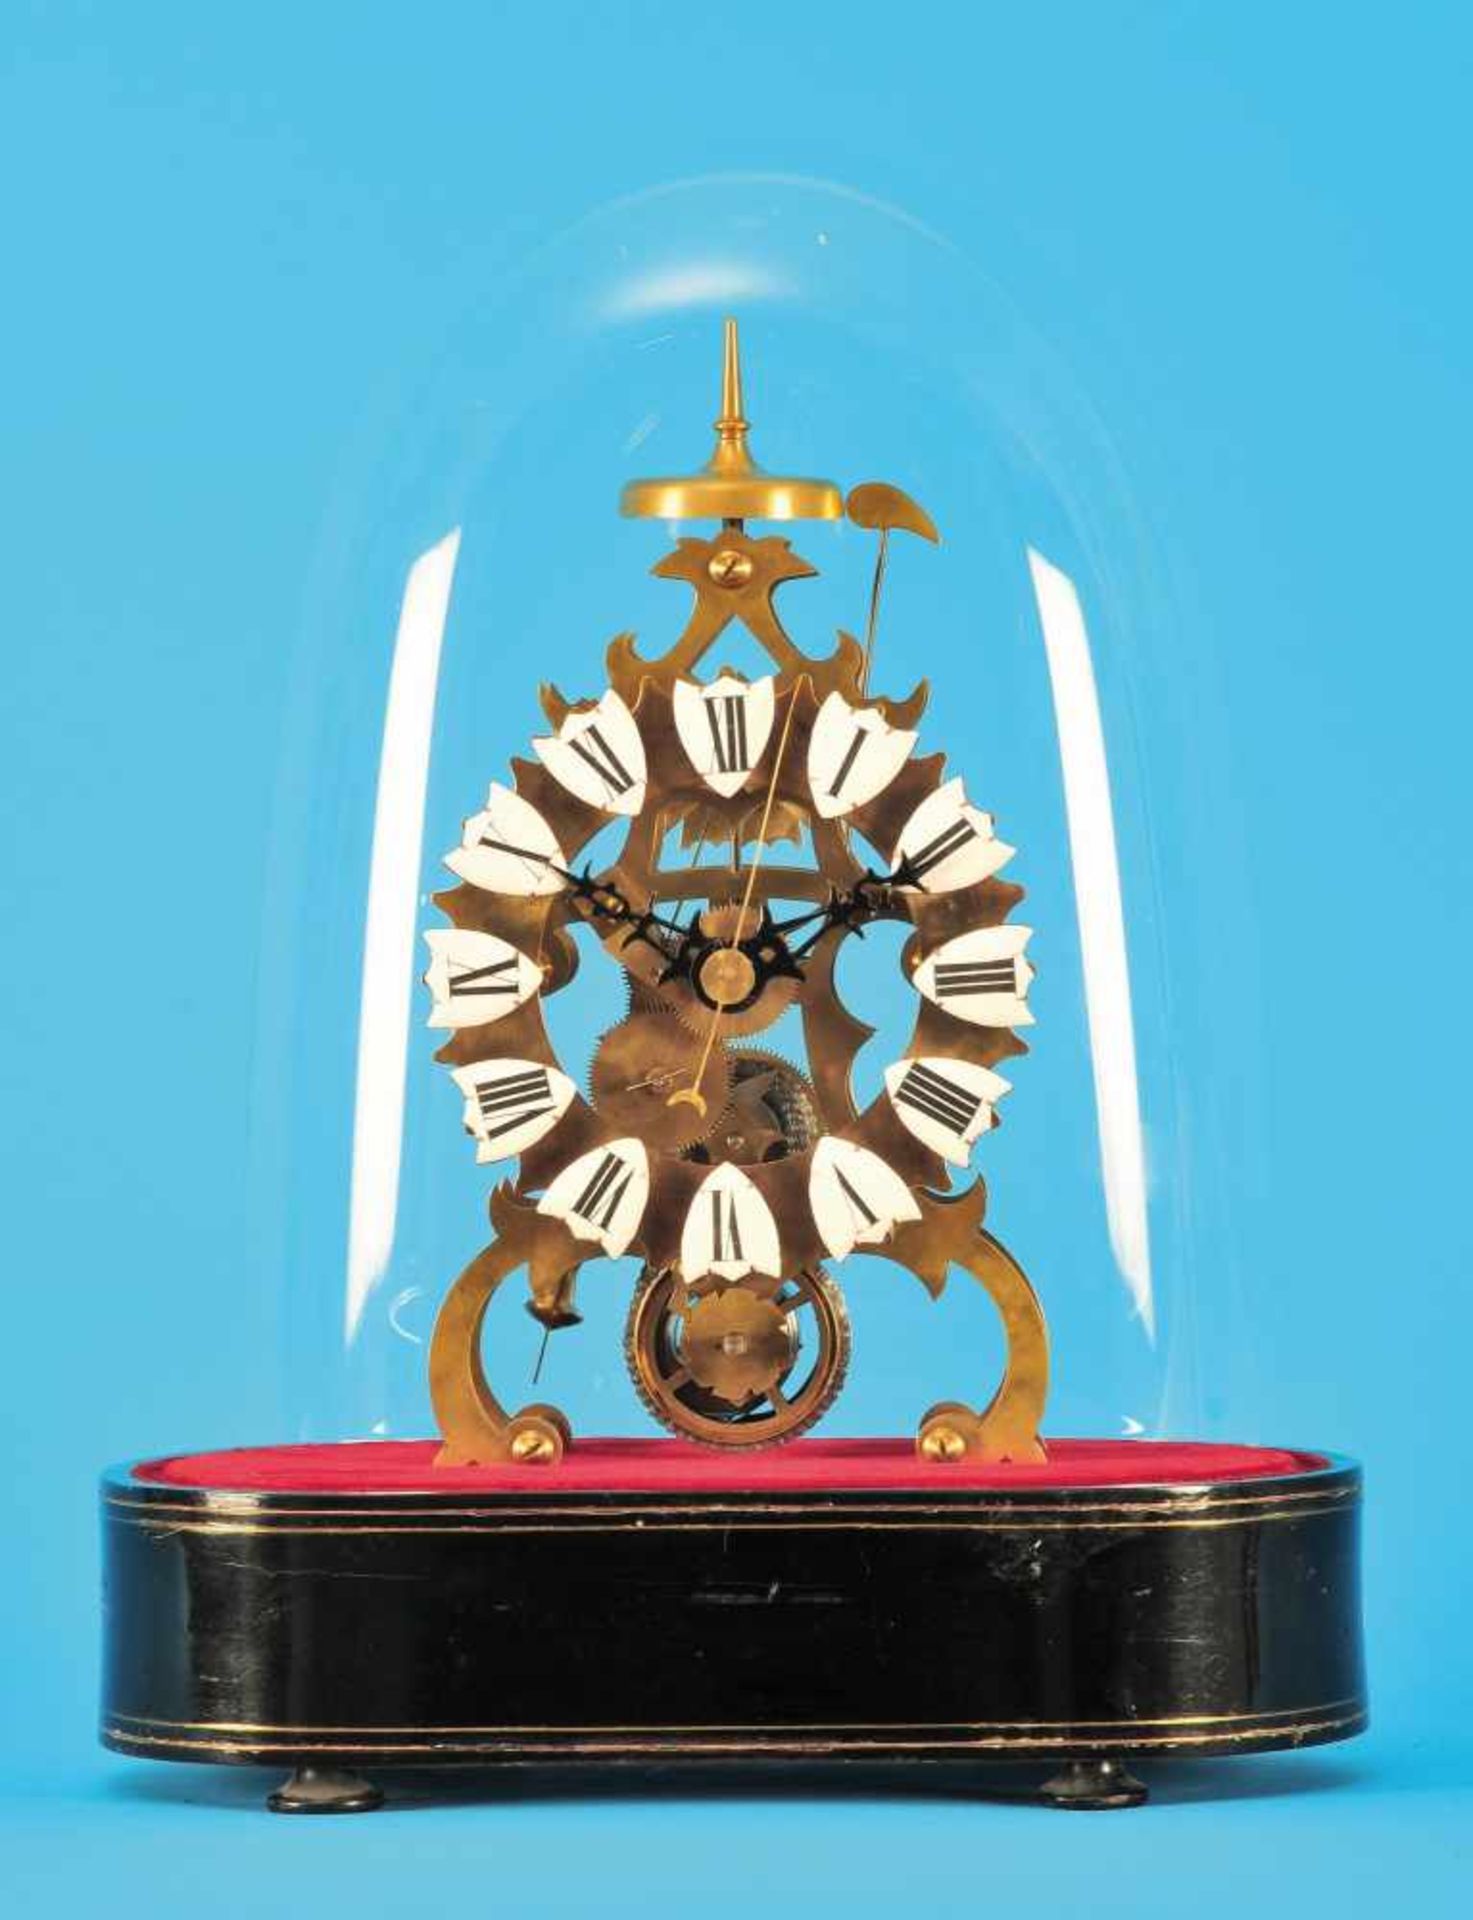 Sceleton clock with glas case with spindle movementSkelettuhr unter Glassturz mit Spindelgang,